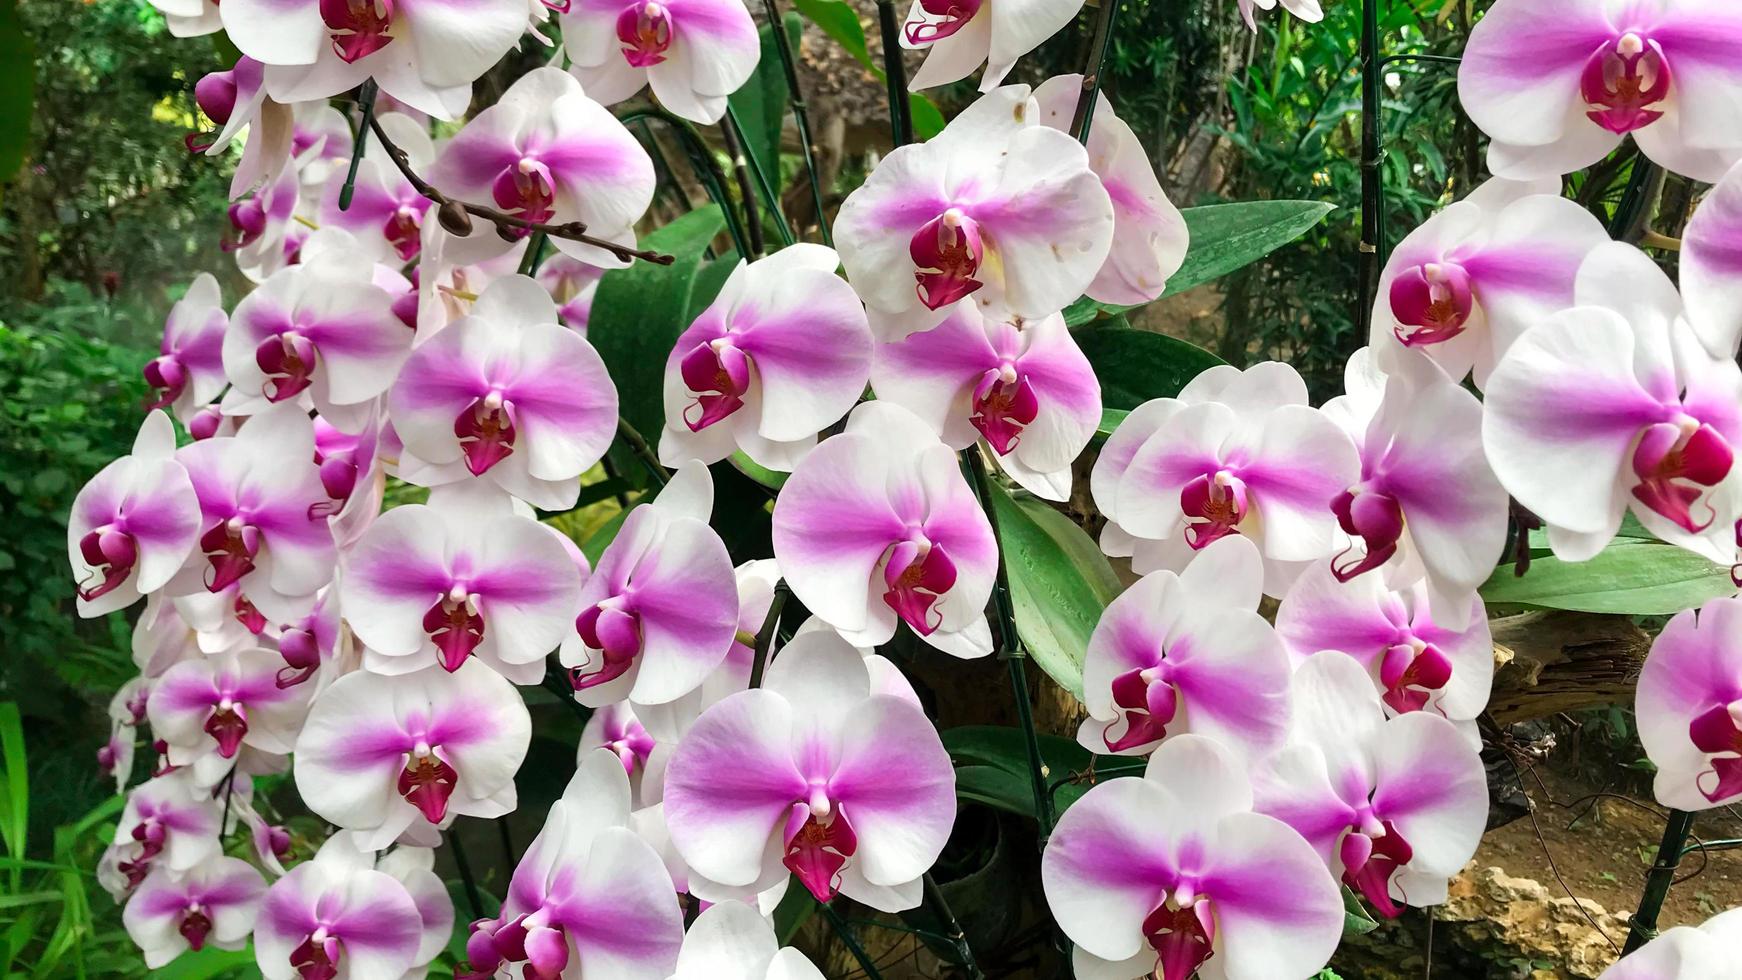 orquídeas rosa e brancas foto